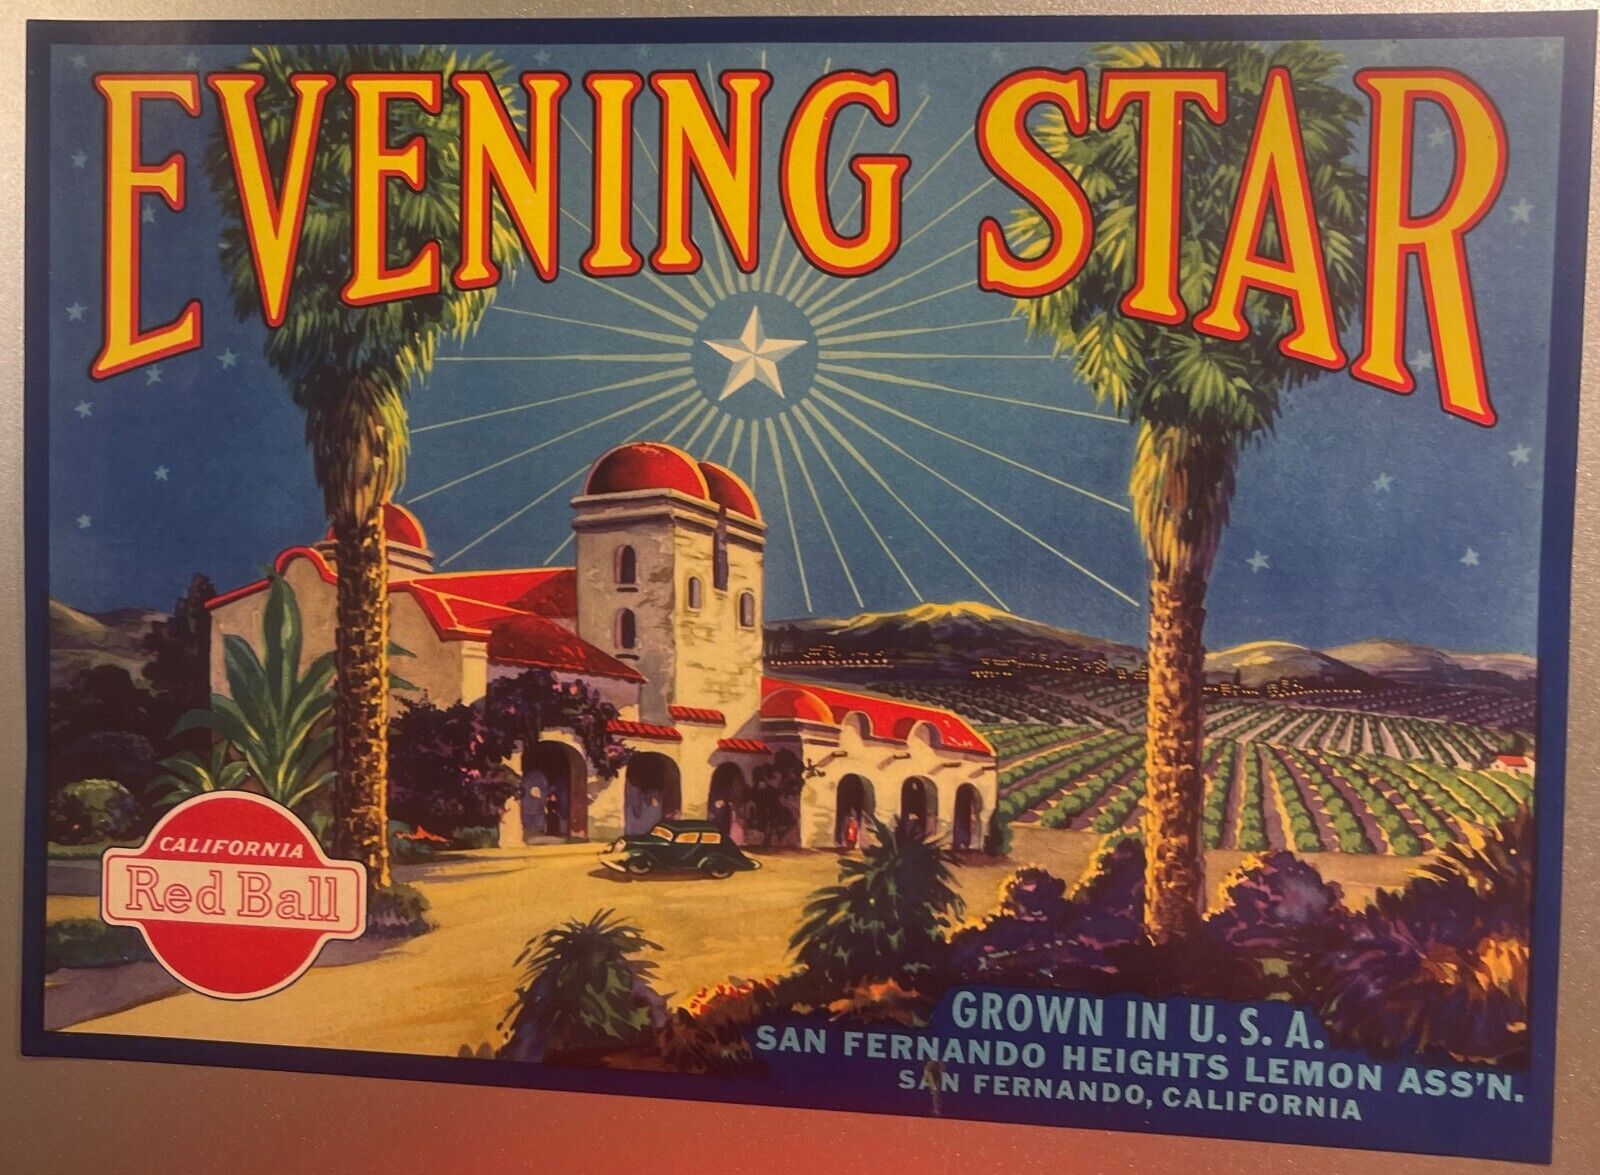 Antique 1930s Vintage Evening Star Crate Label, San Fernando, CA